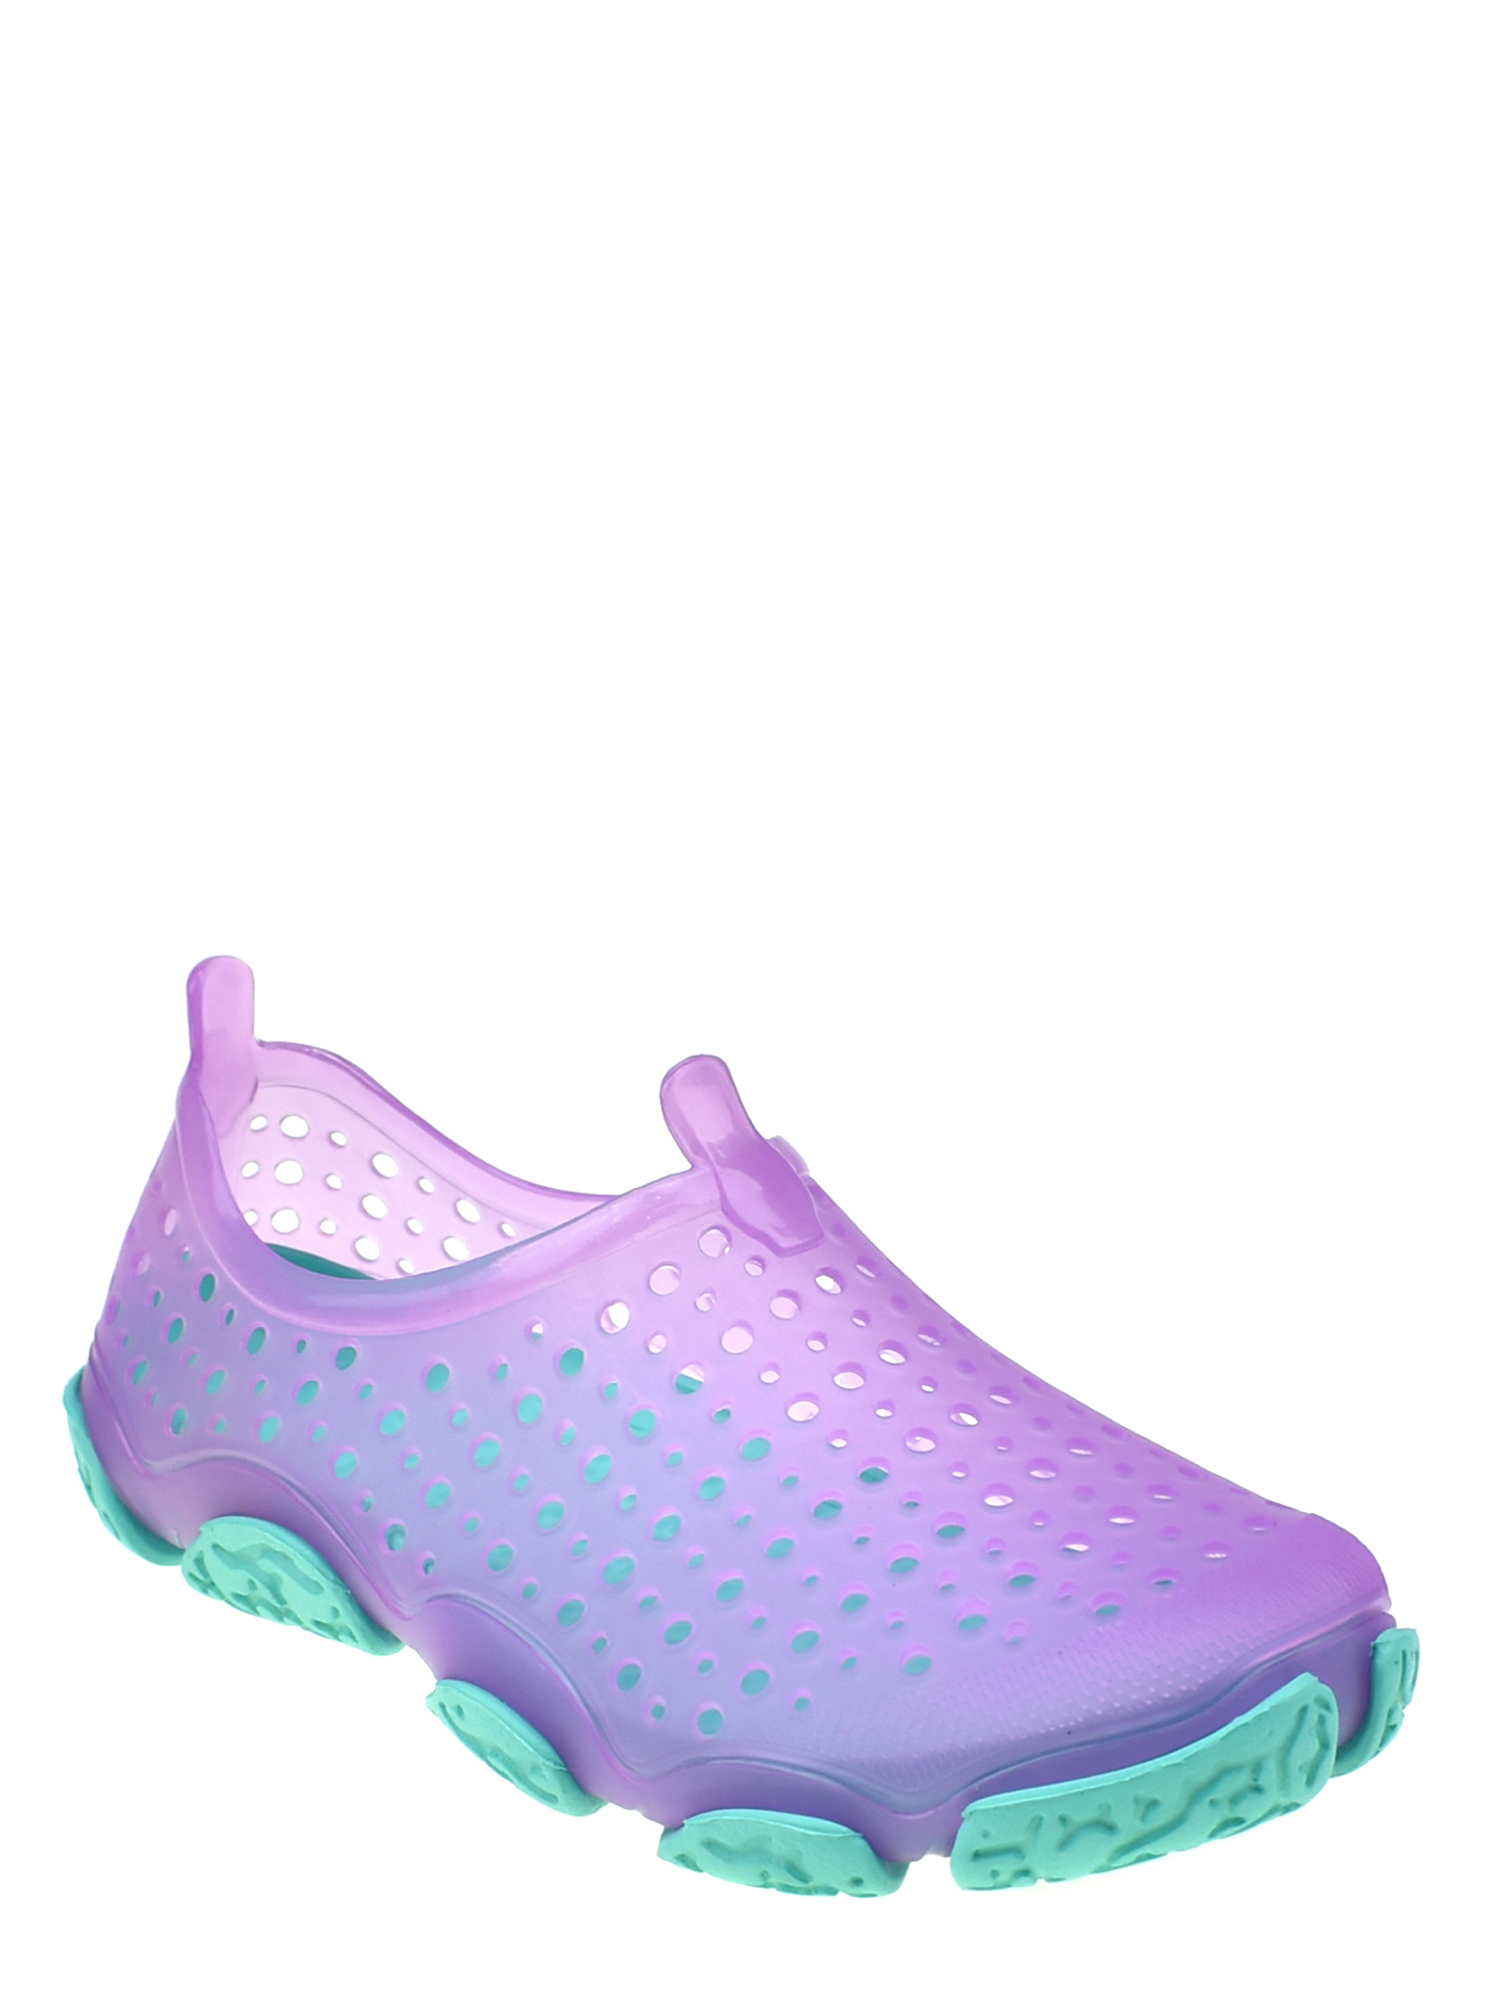 Toddler//Little Kid//Big Kid 2 Pack Non-Slip Quick Dry Waterproof Aqua Shoes Aquakiks Girls Water Shoes